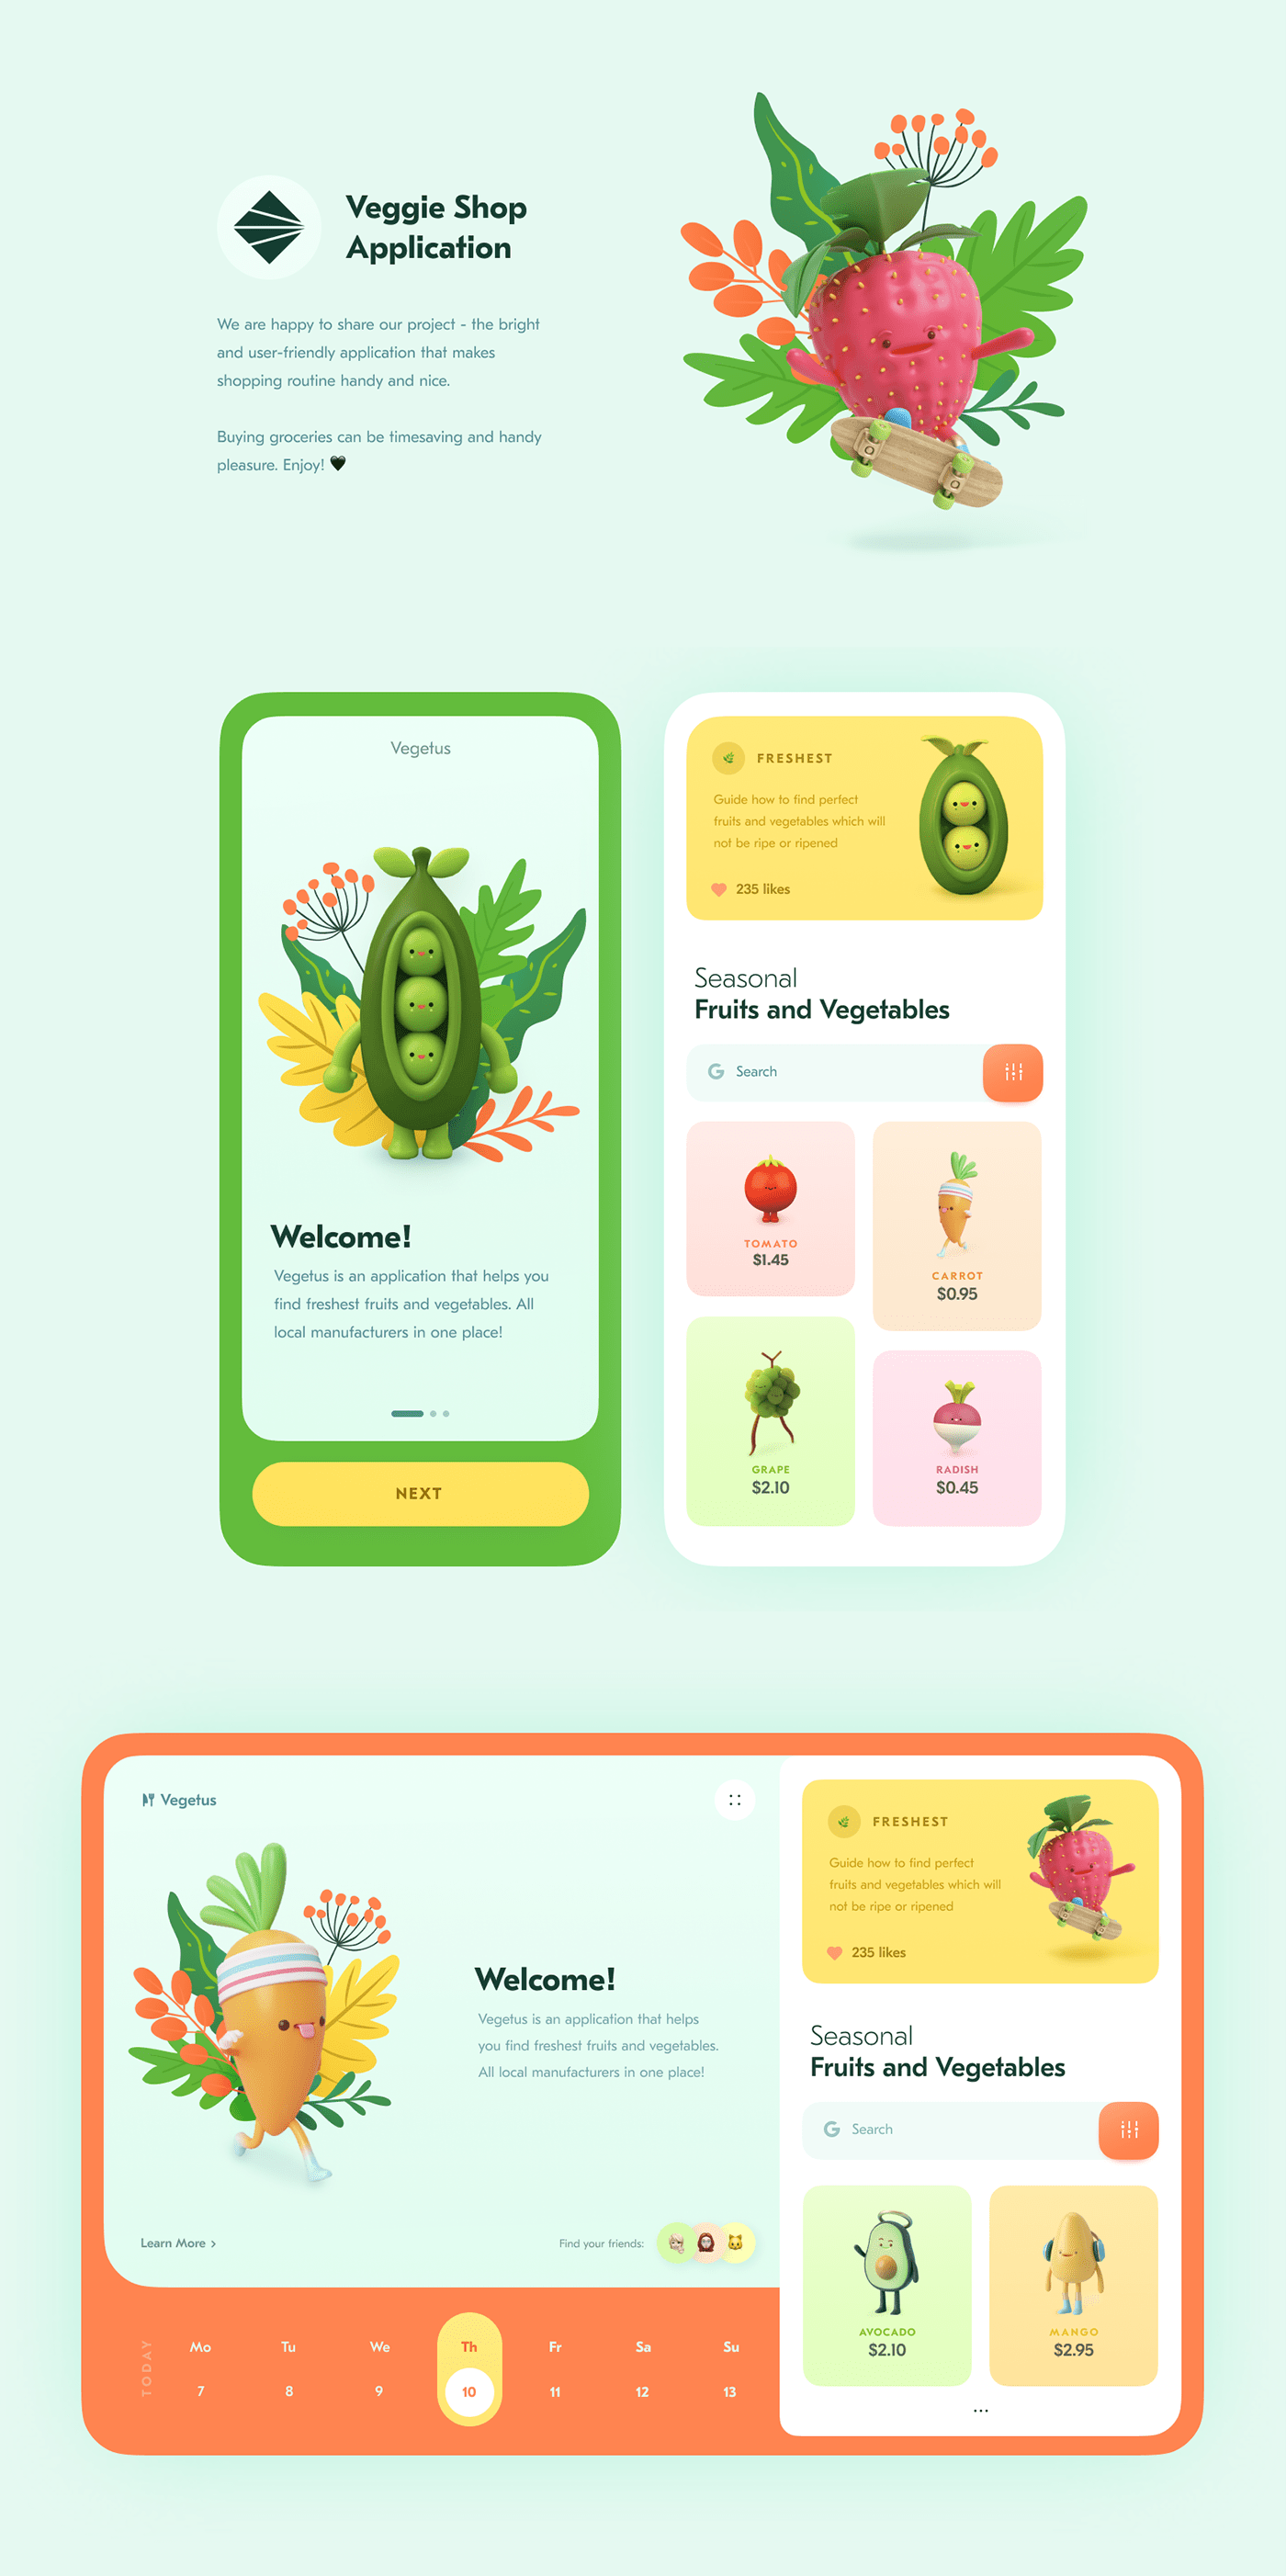 Mobile app inspiration example #454: Veggie Shop App